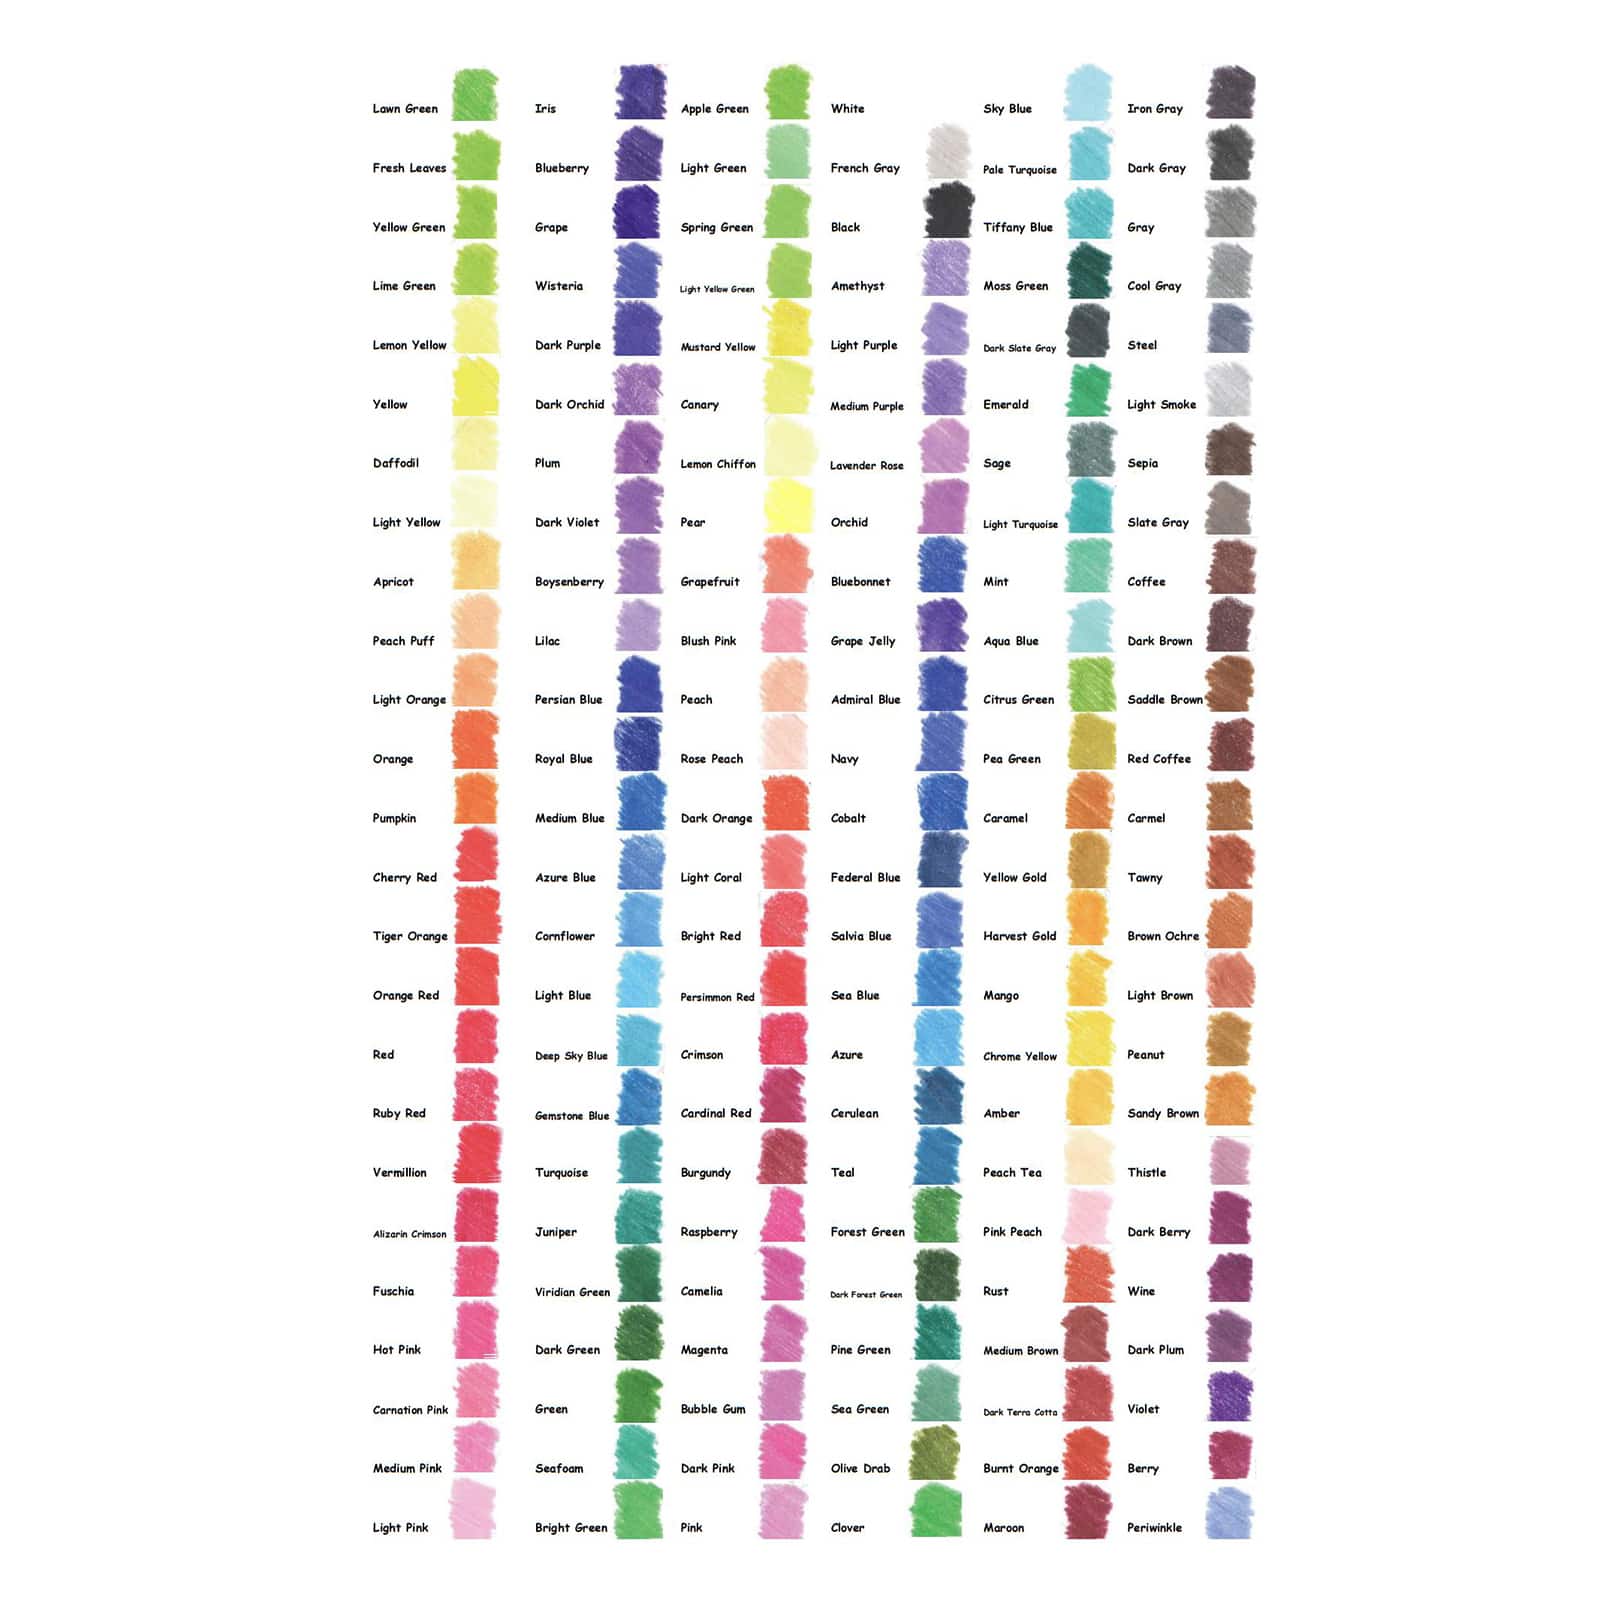 Thorntons Art Supply Premium 150 Artist Pencil Set- Colored